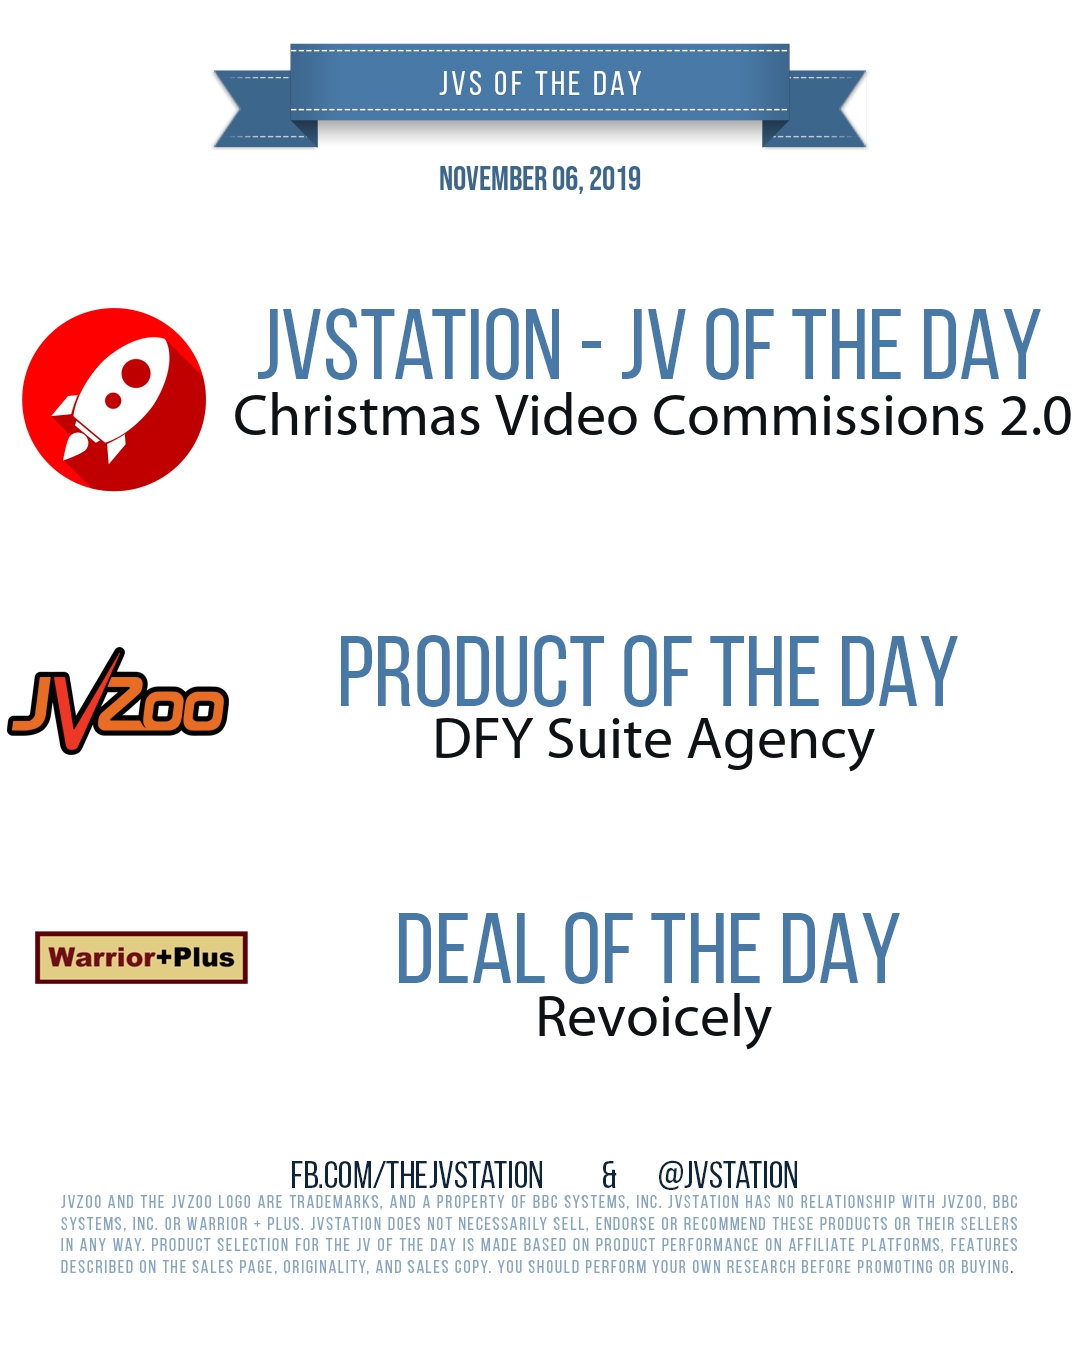 JVs of the day - November 06, 2019